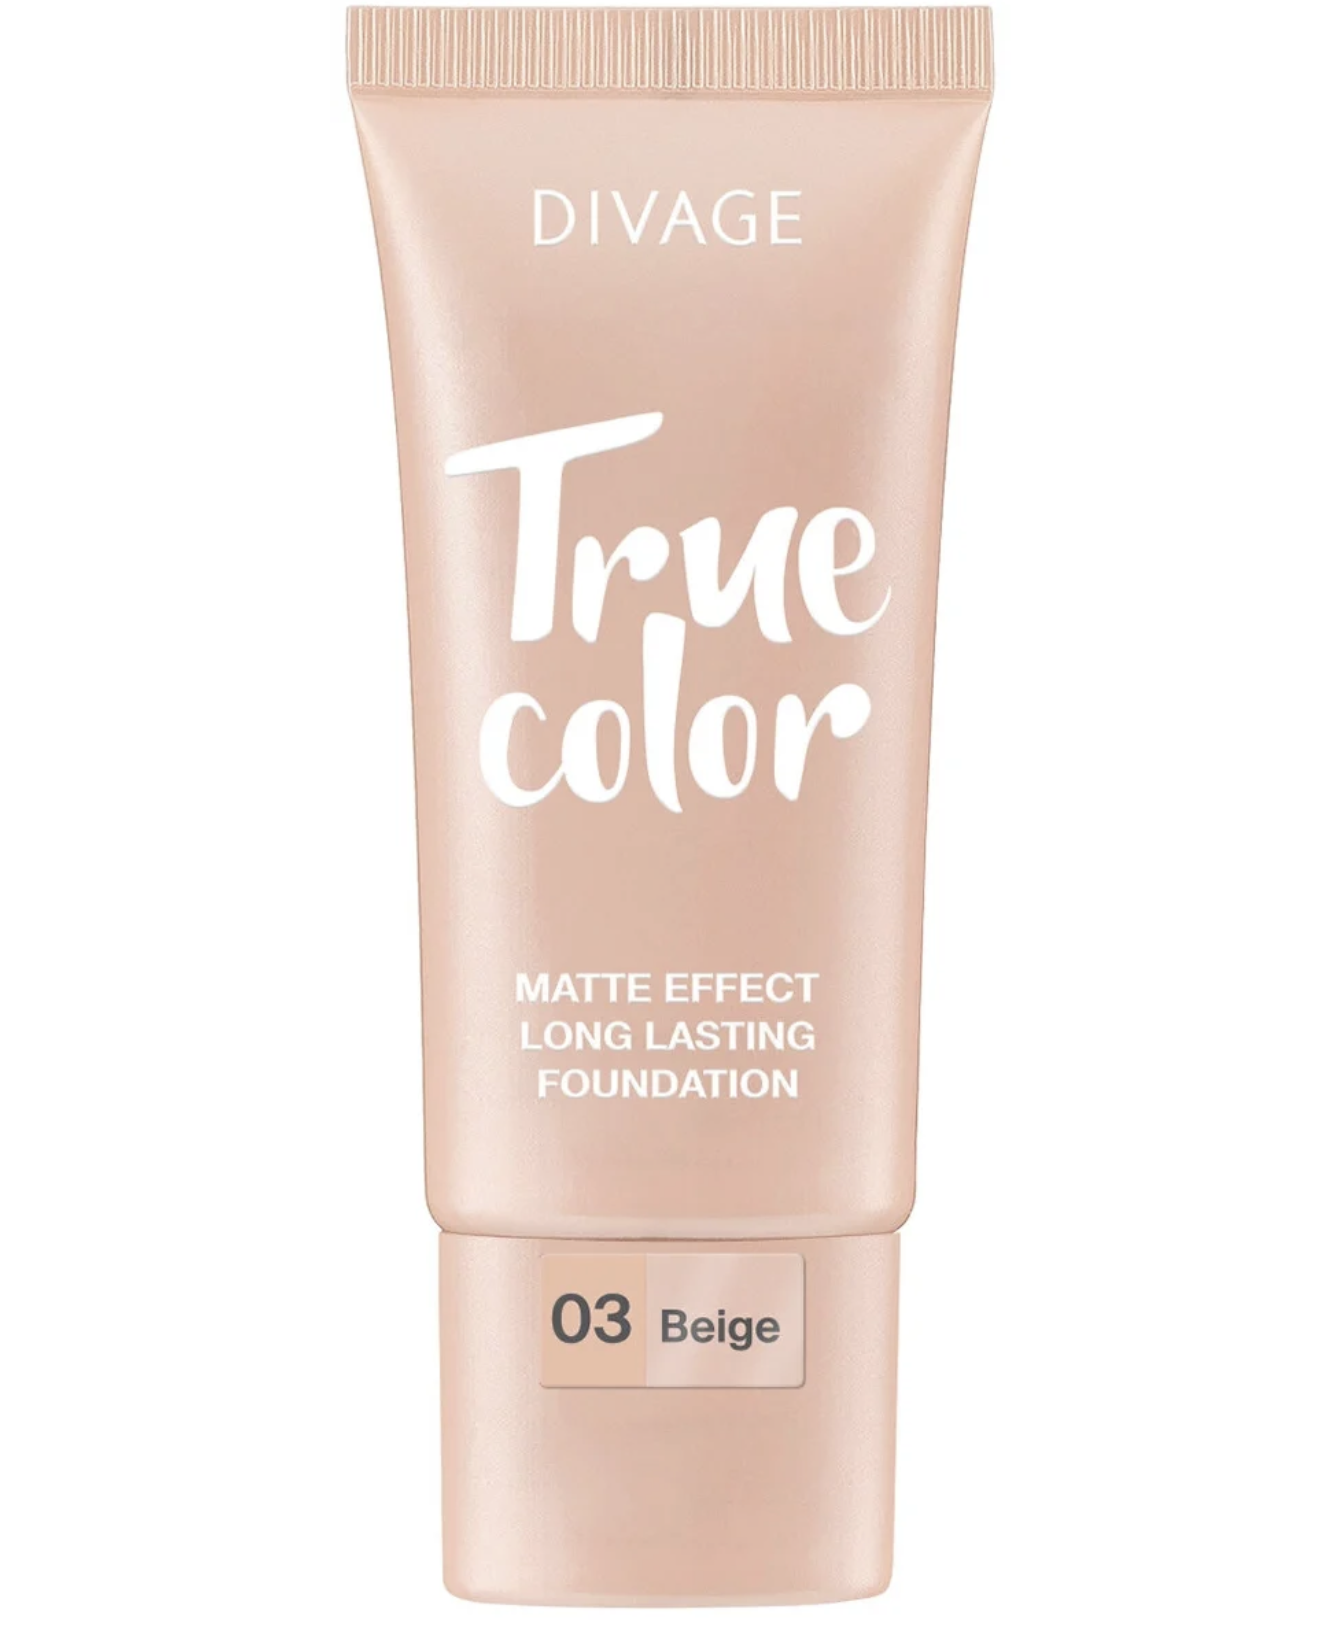   / Divage -     True Color  03 Beige 25 